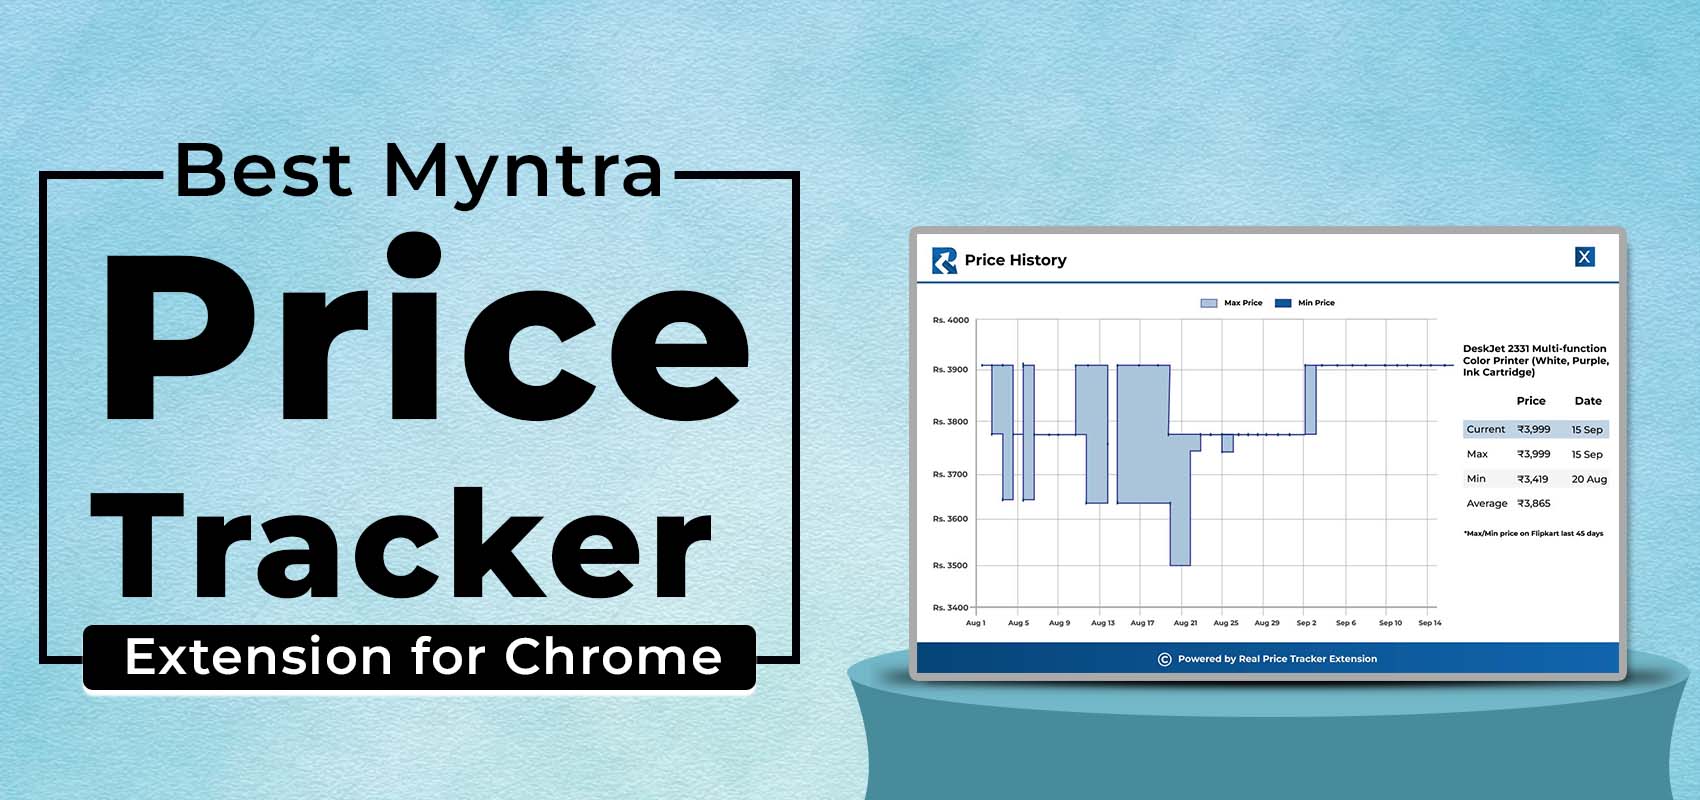 Myntra price tracker